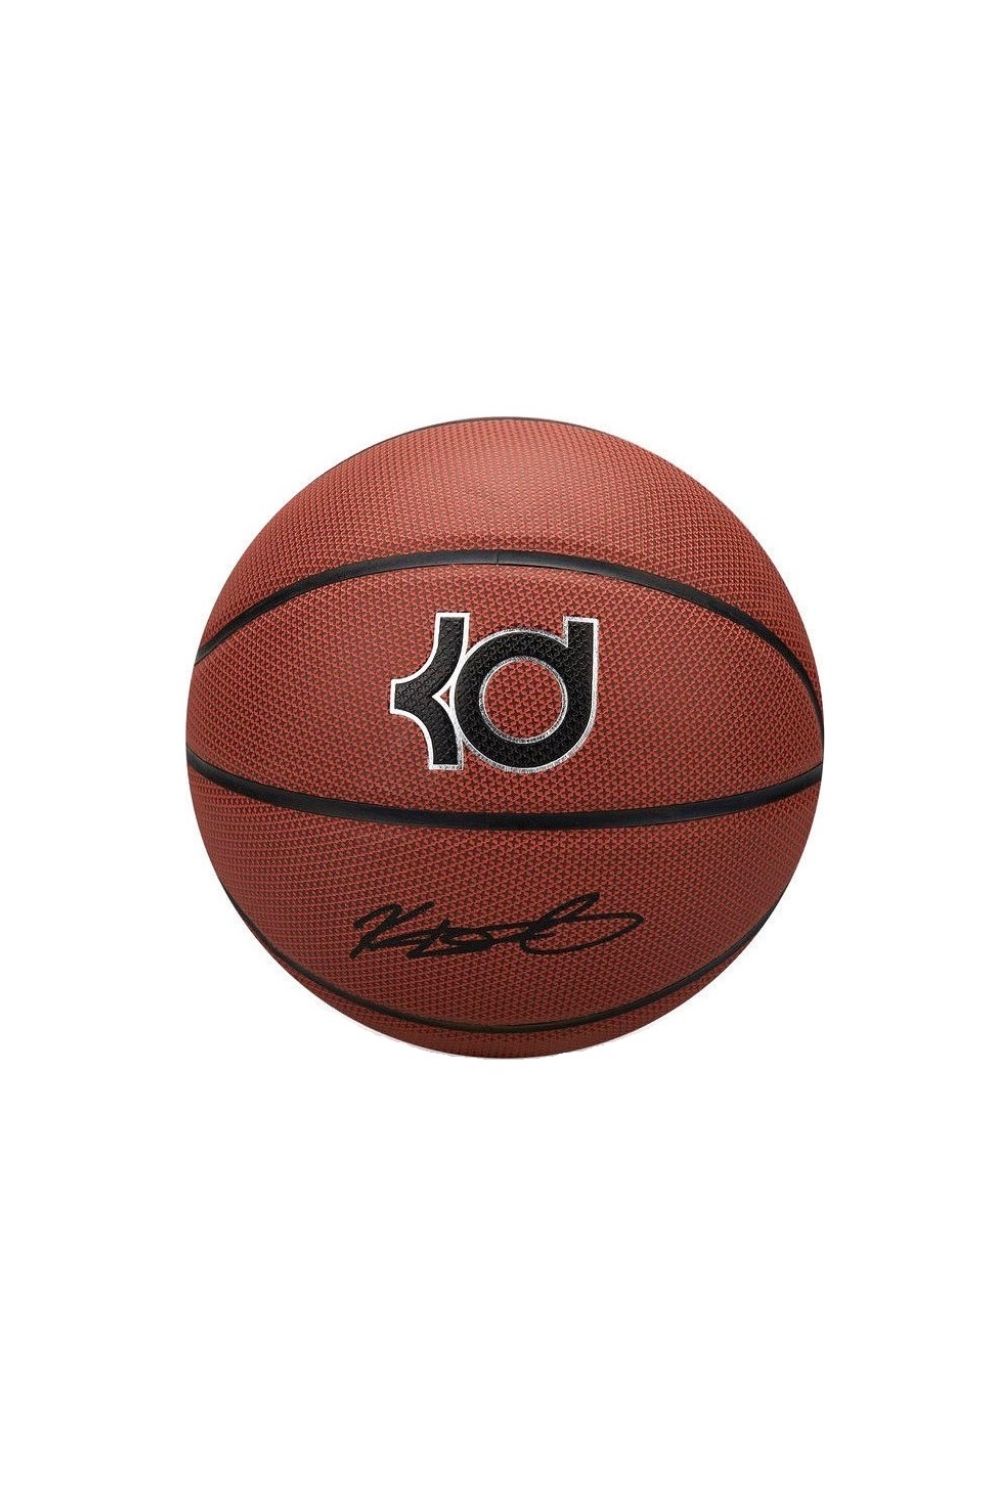 NIKE - Μπάλα μπάσκετ NIKE KD FULL COURT 8P πορτοκαλί Ανδρικά/Αξεσουάρ/Αθλητικά Είδη/Μπάλες